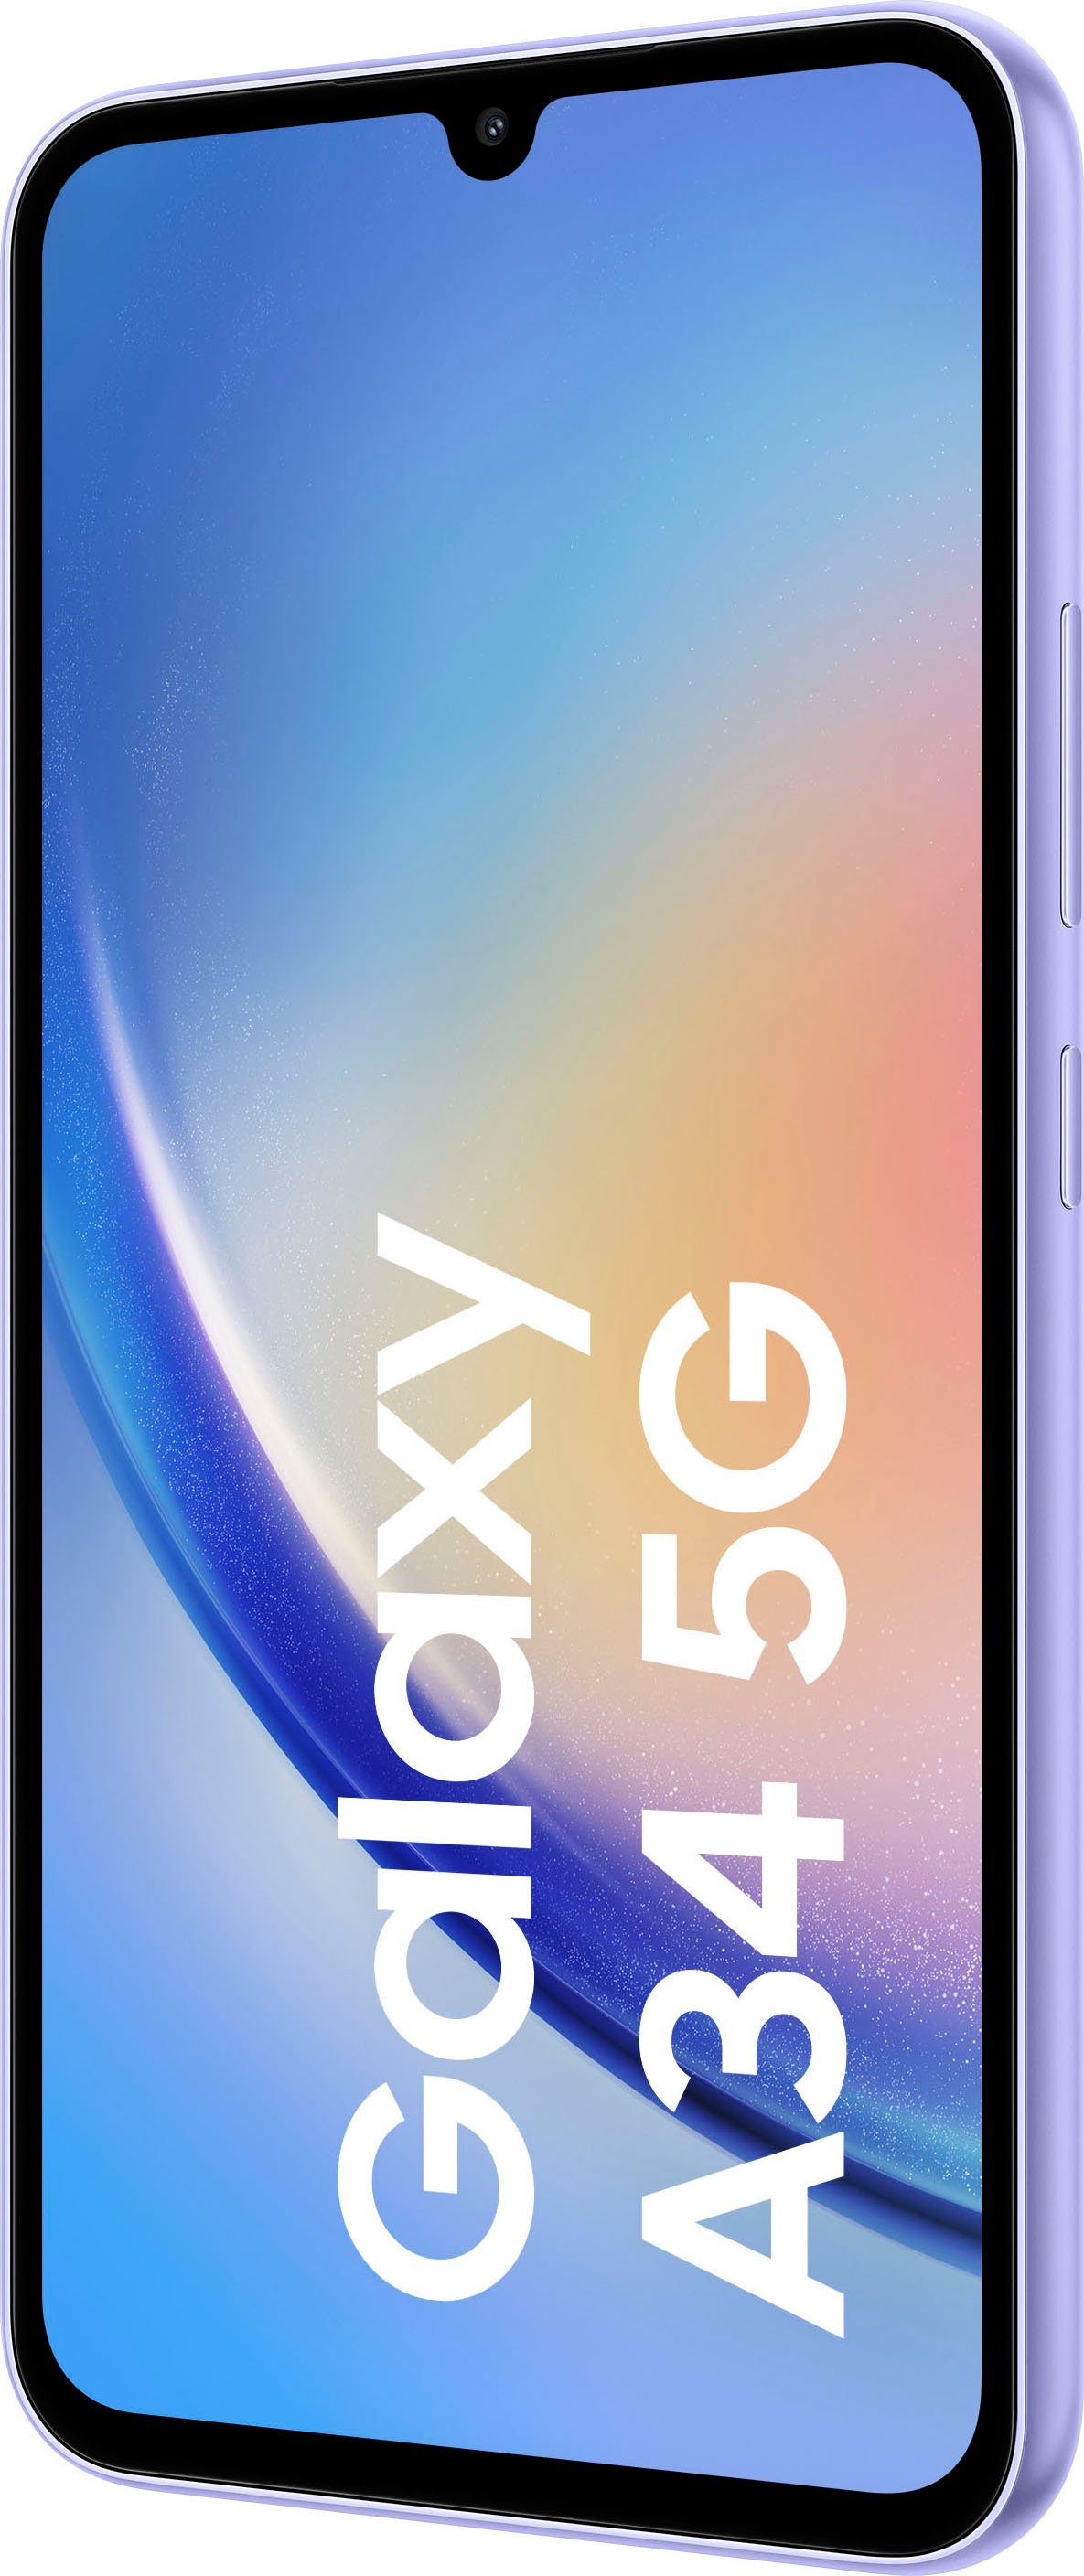 A34 Speicherplatz, Smartphone leicht 256GB Zoll, MP Galaxy Kamera) GB 5G cm/6,6 256 48 (16,65 violett Samsung